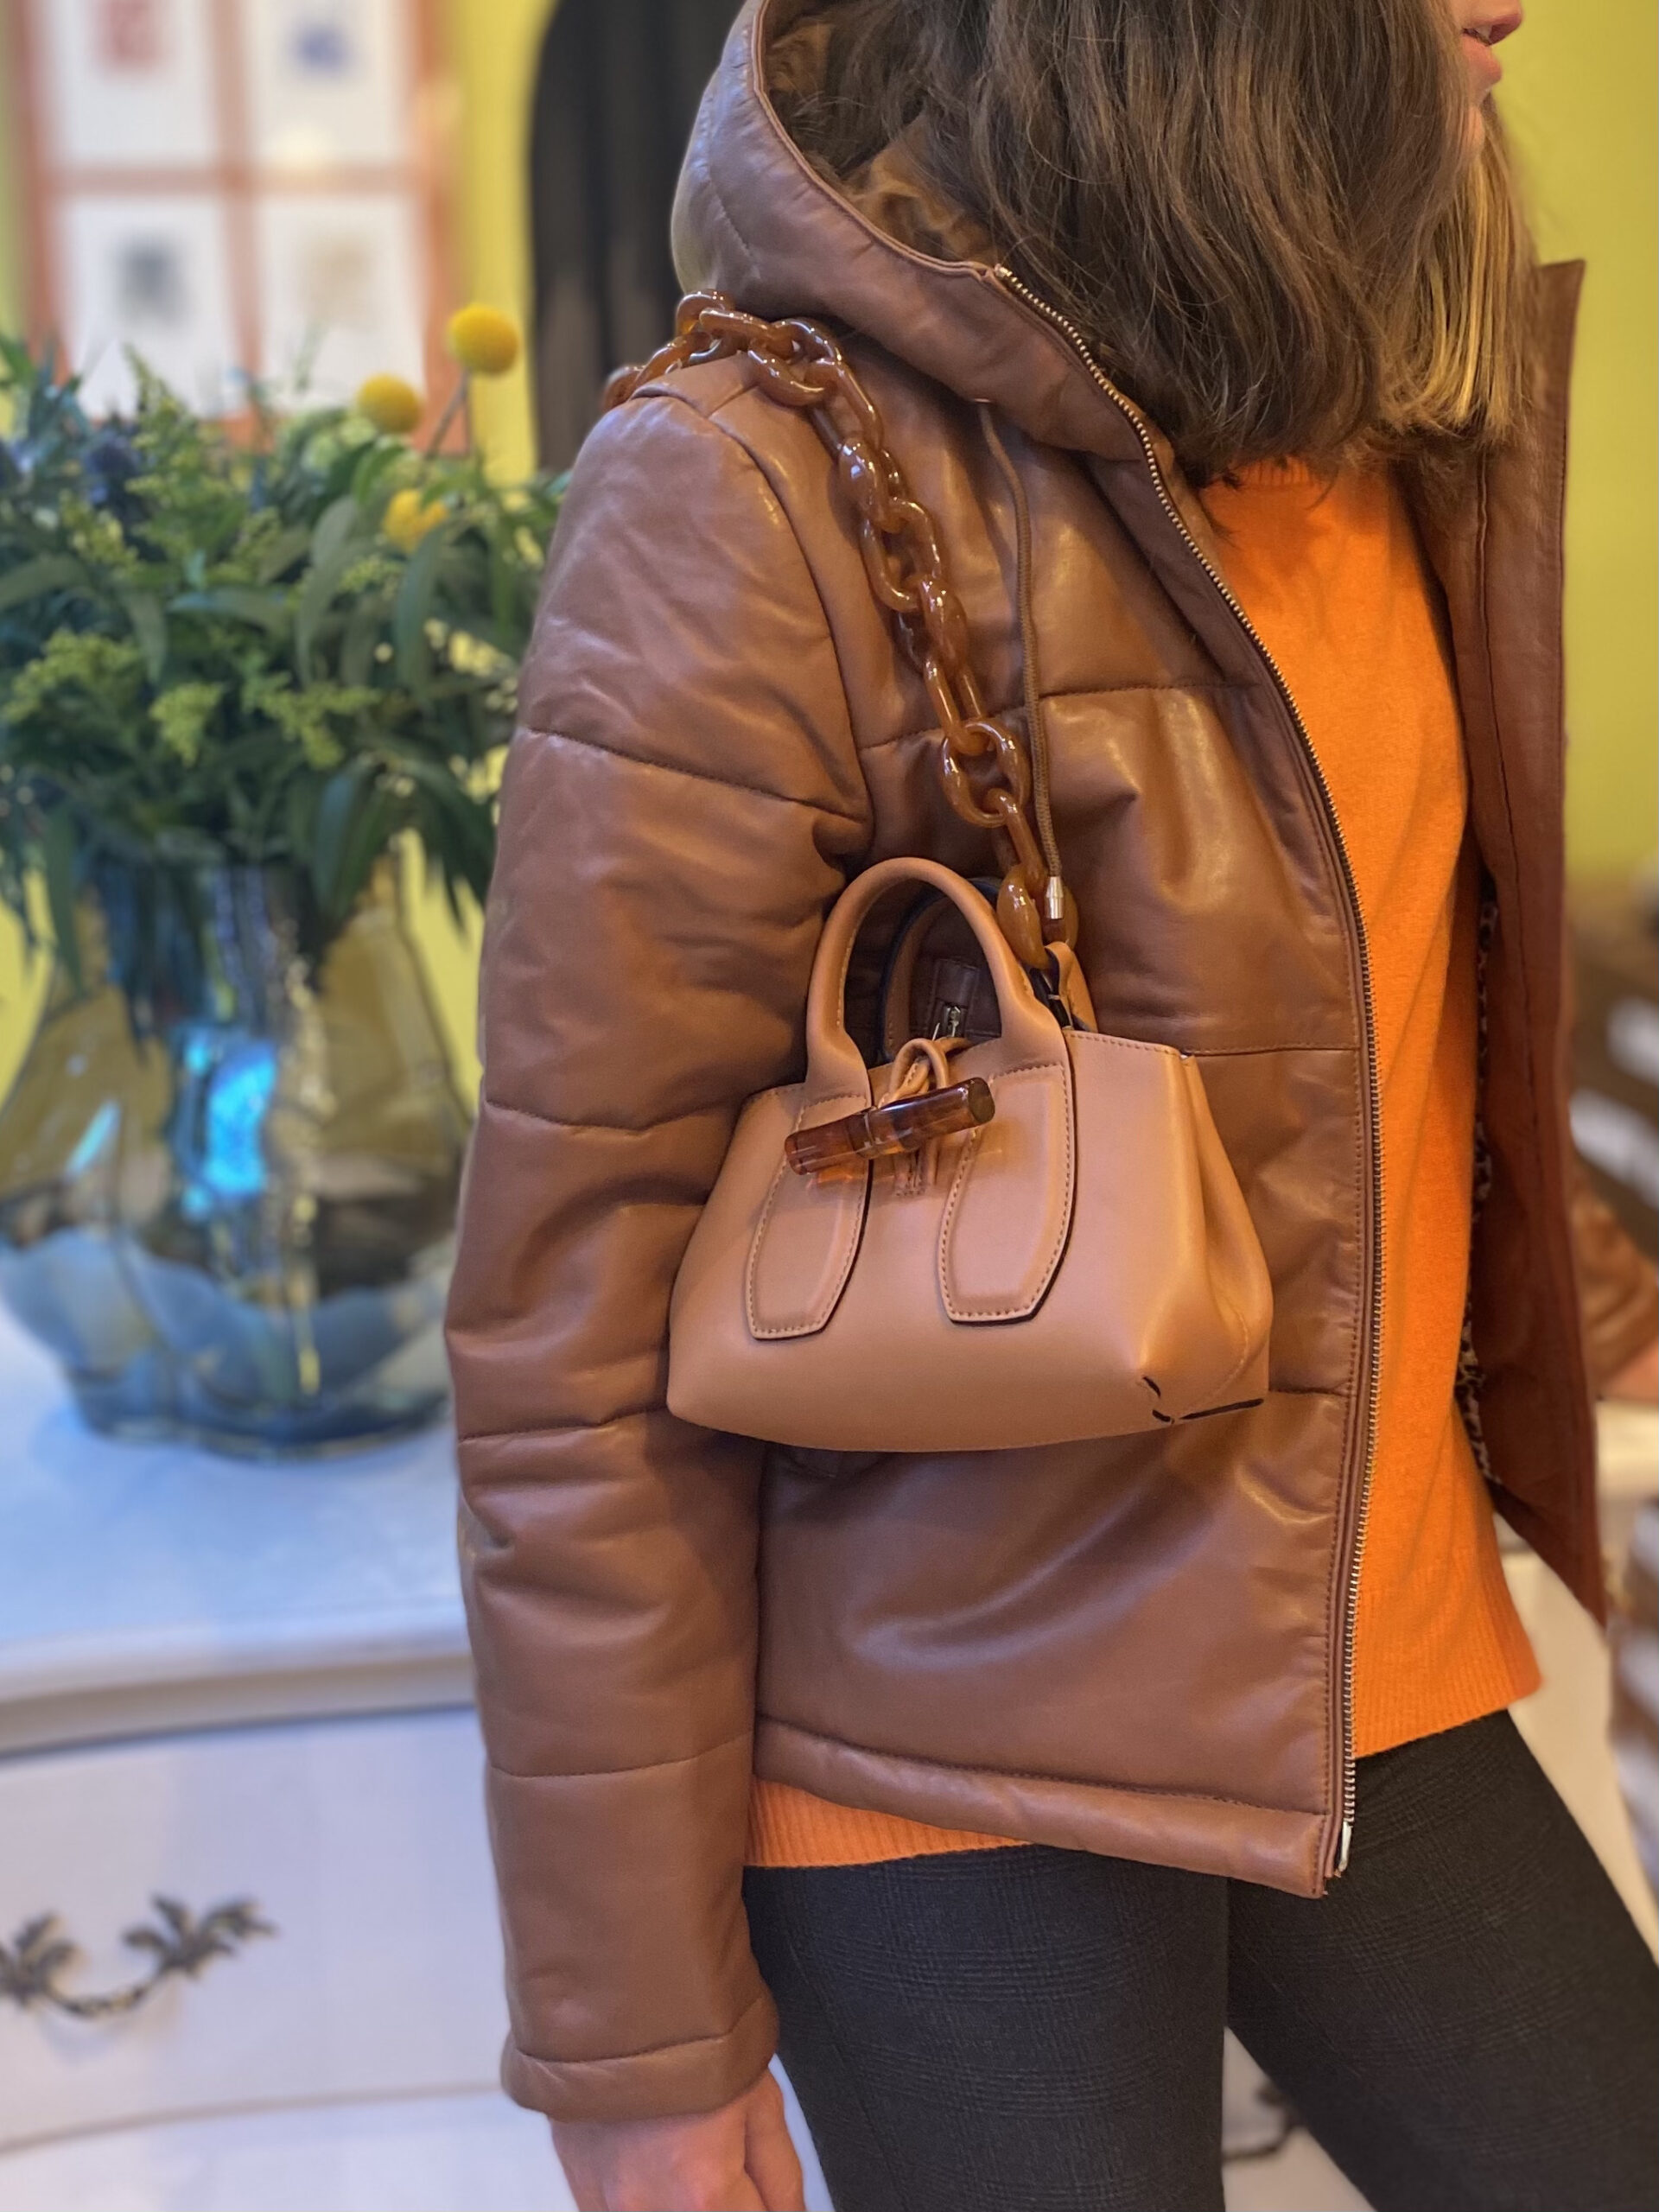 XS Roseau Leather Top Handle Bag